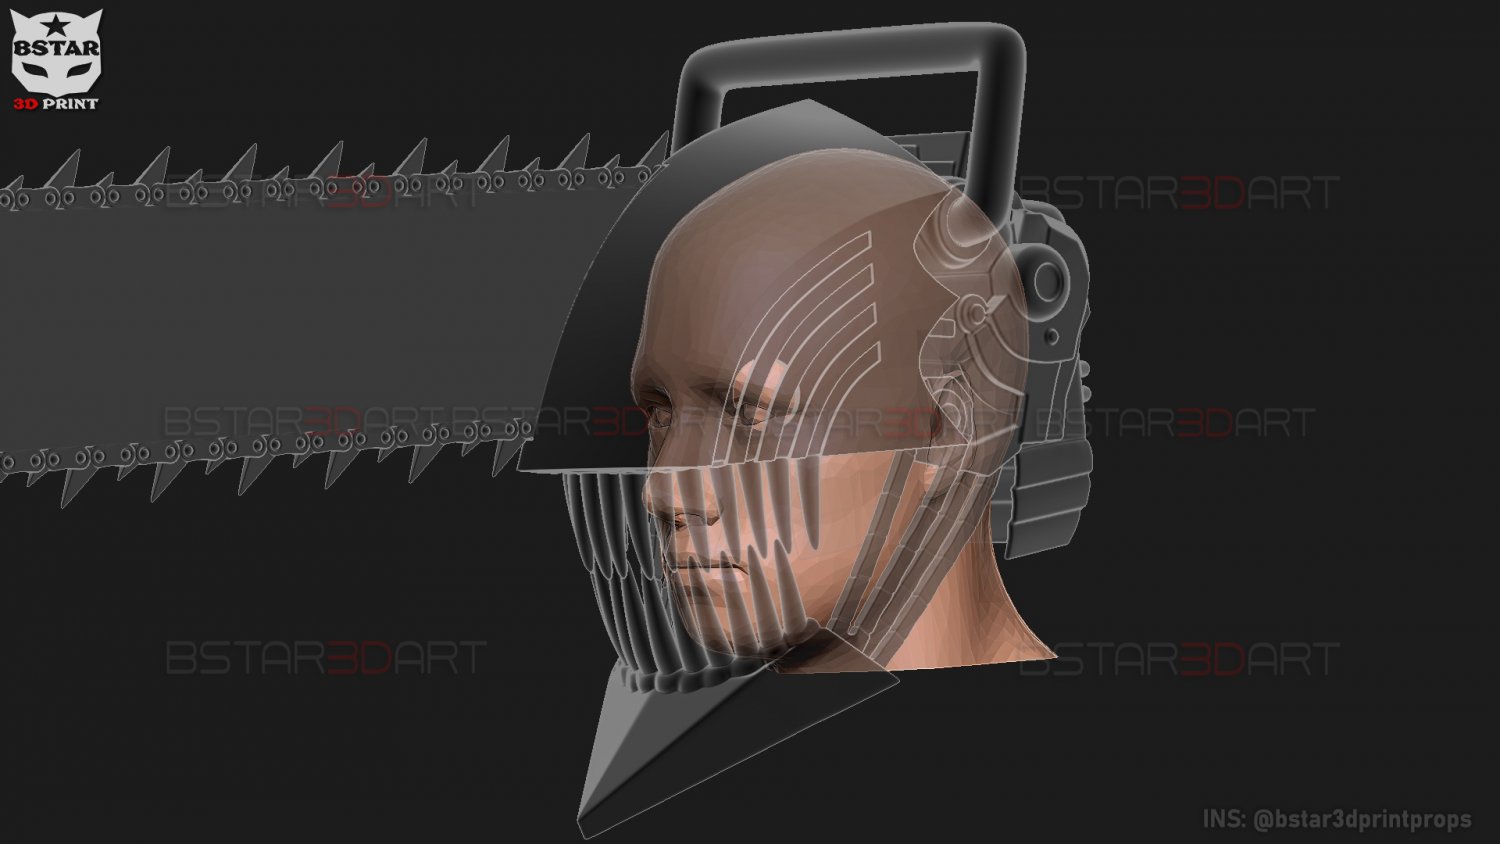 Chainsaw Man Helmet - Denji Cosplay 3D print model 3D Print Model in Toys  3DExport